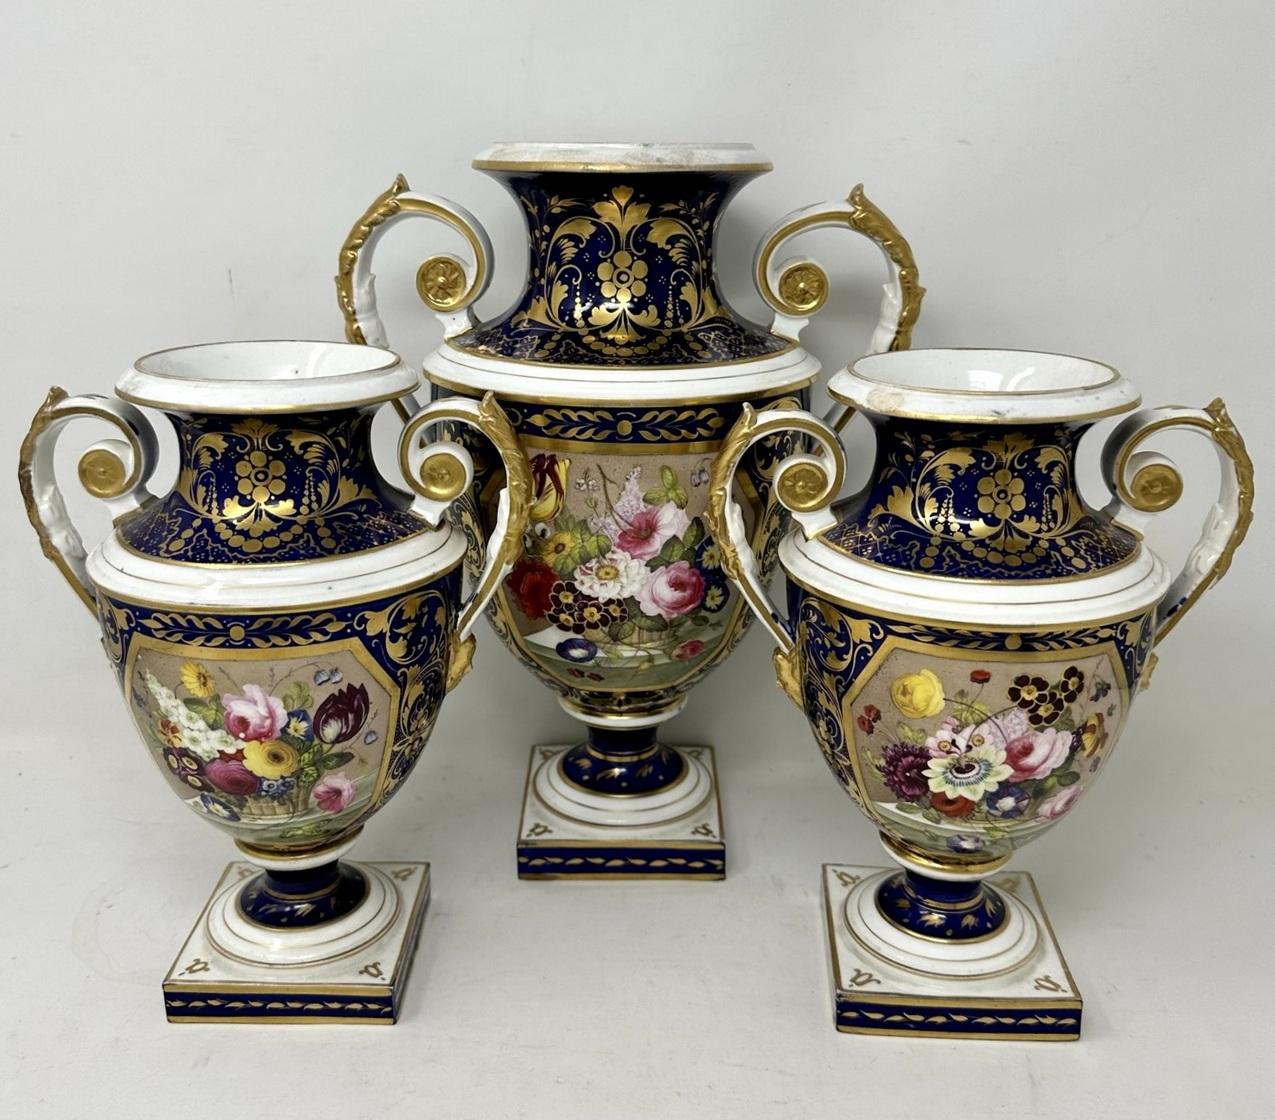 Regency Antique Garniture English Royal Crown Derby Porcelain Vases by Thomas Steel 19C  For Sale